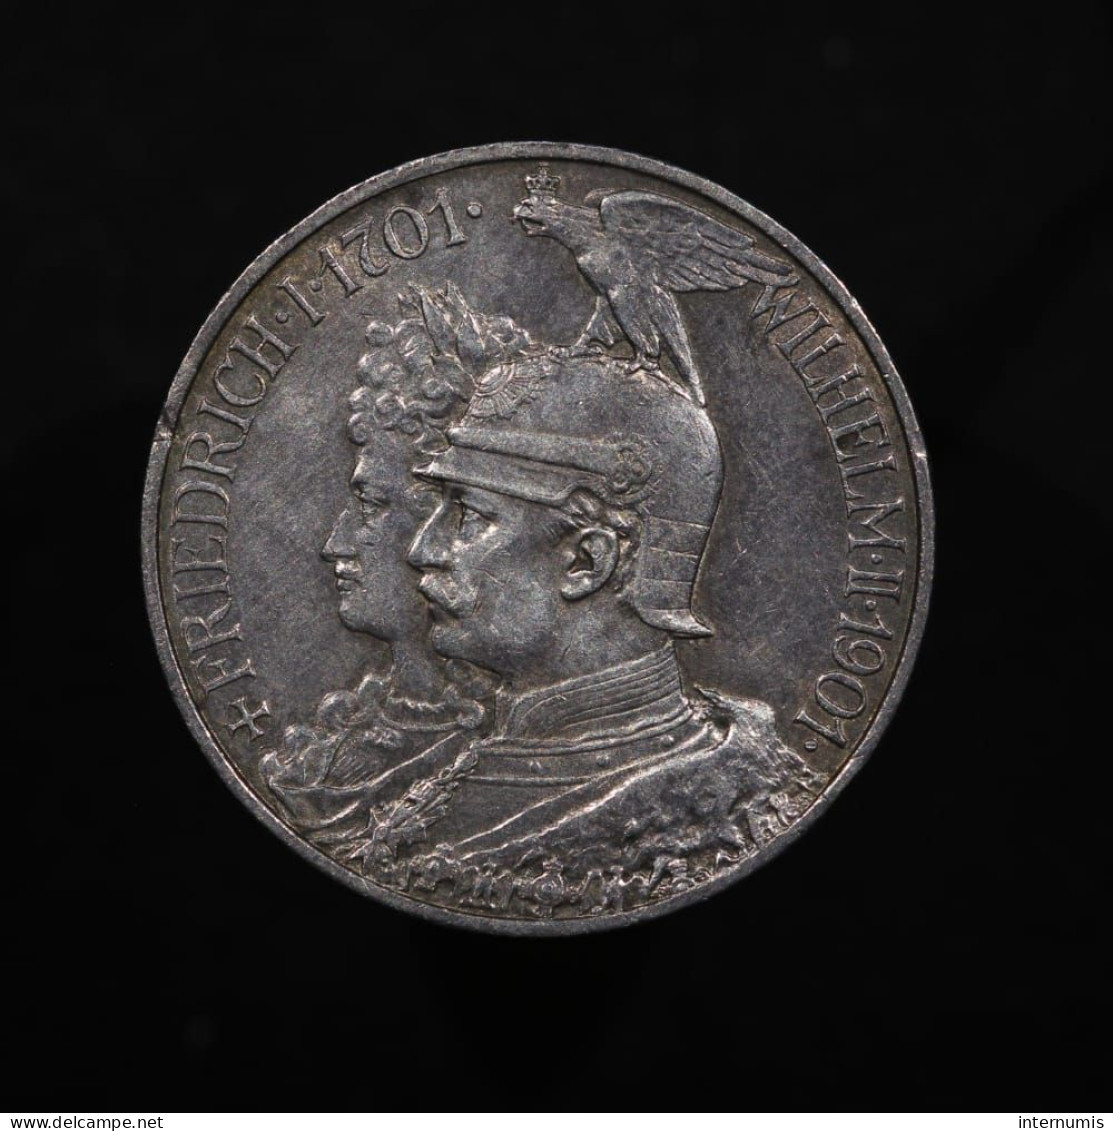 Allemagne / Germany, Wilhelm II (Prusse / Prussia), 2 Mark, 1901, A - Berlin, Argent (Silver), SUP (AU), KM#525 - 2, 3 & 5 Mark Argent